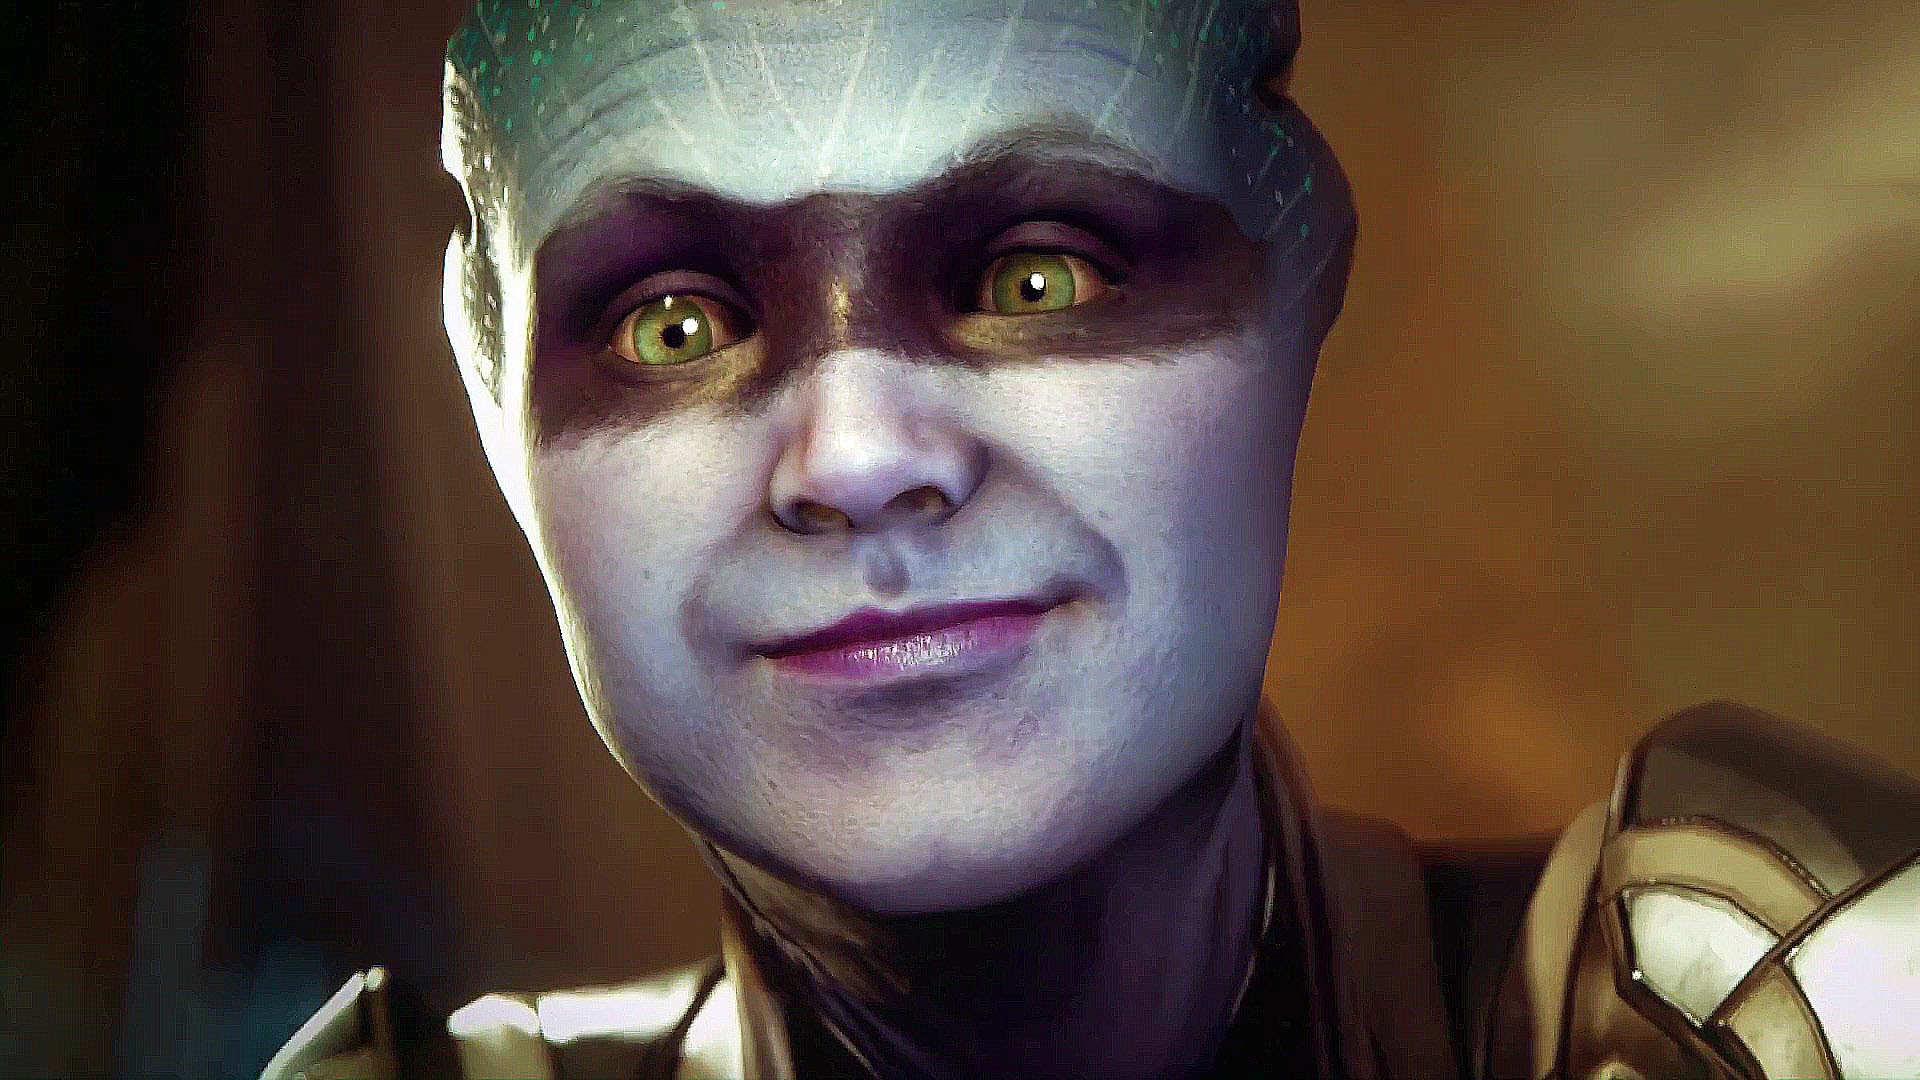 Mass Effect Andomeda HDR Confirmado en Xbox One S y PS4 -GamersRD